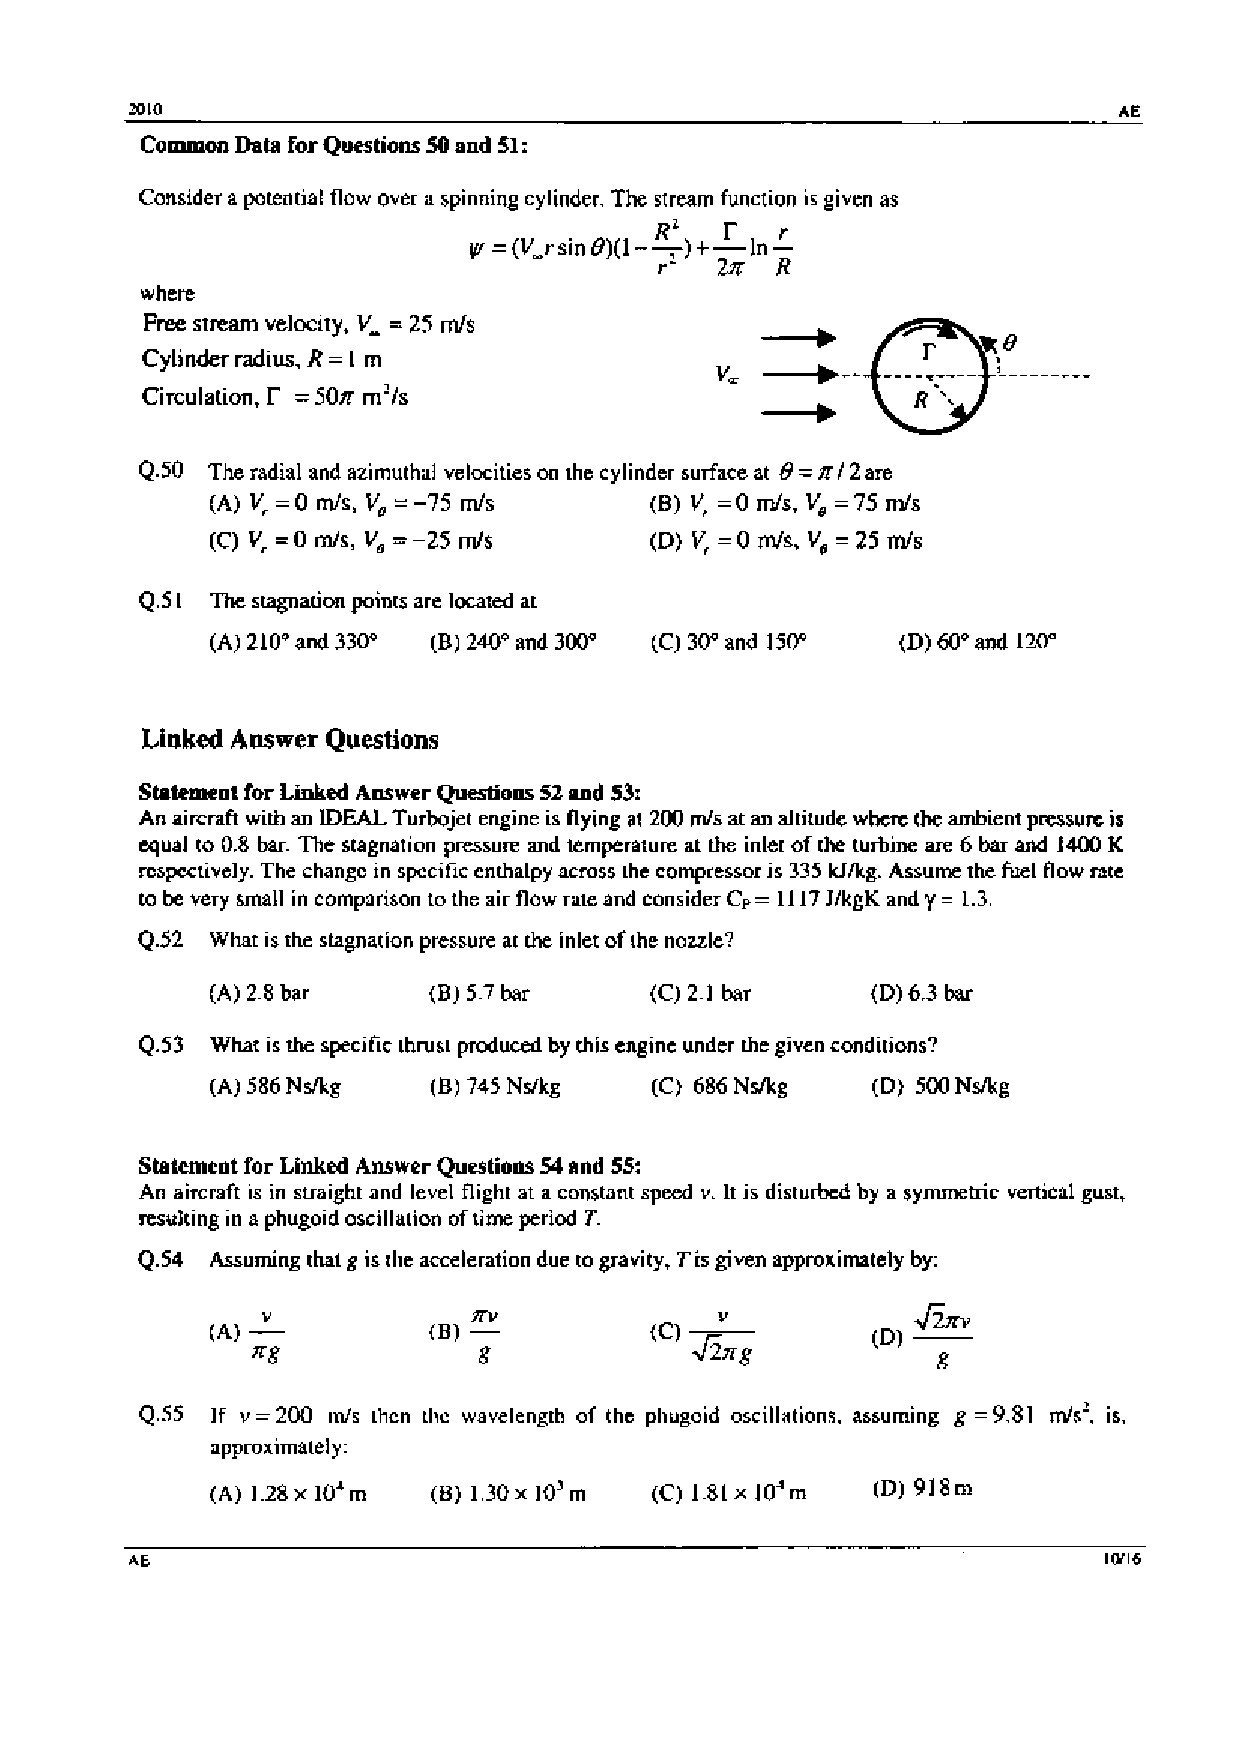 GATE Exam 2010 Aerospace Engineering Question Paper 10